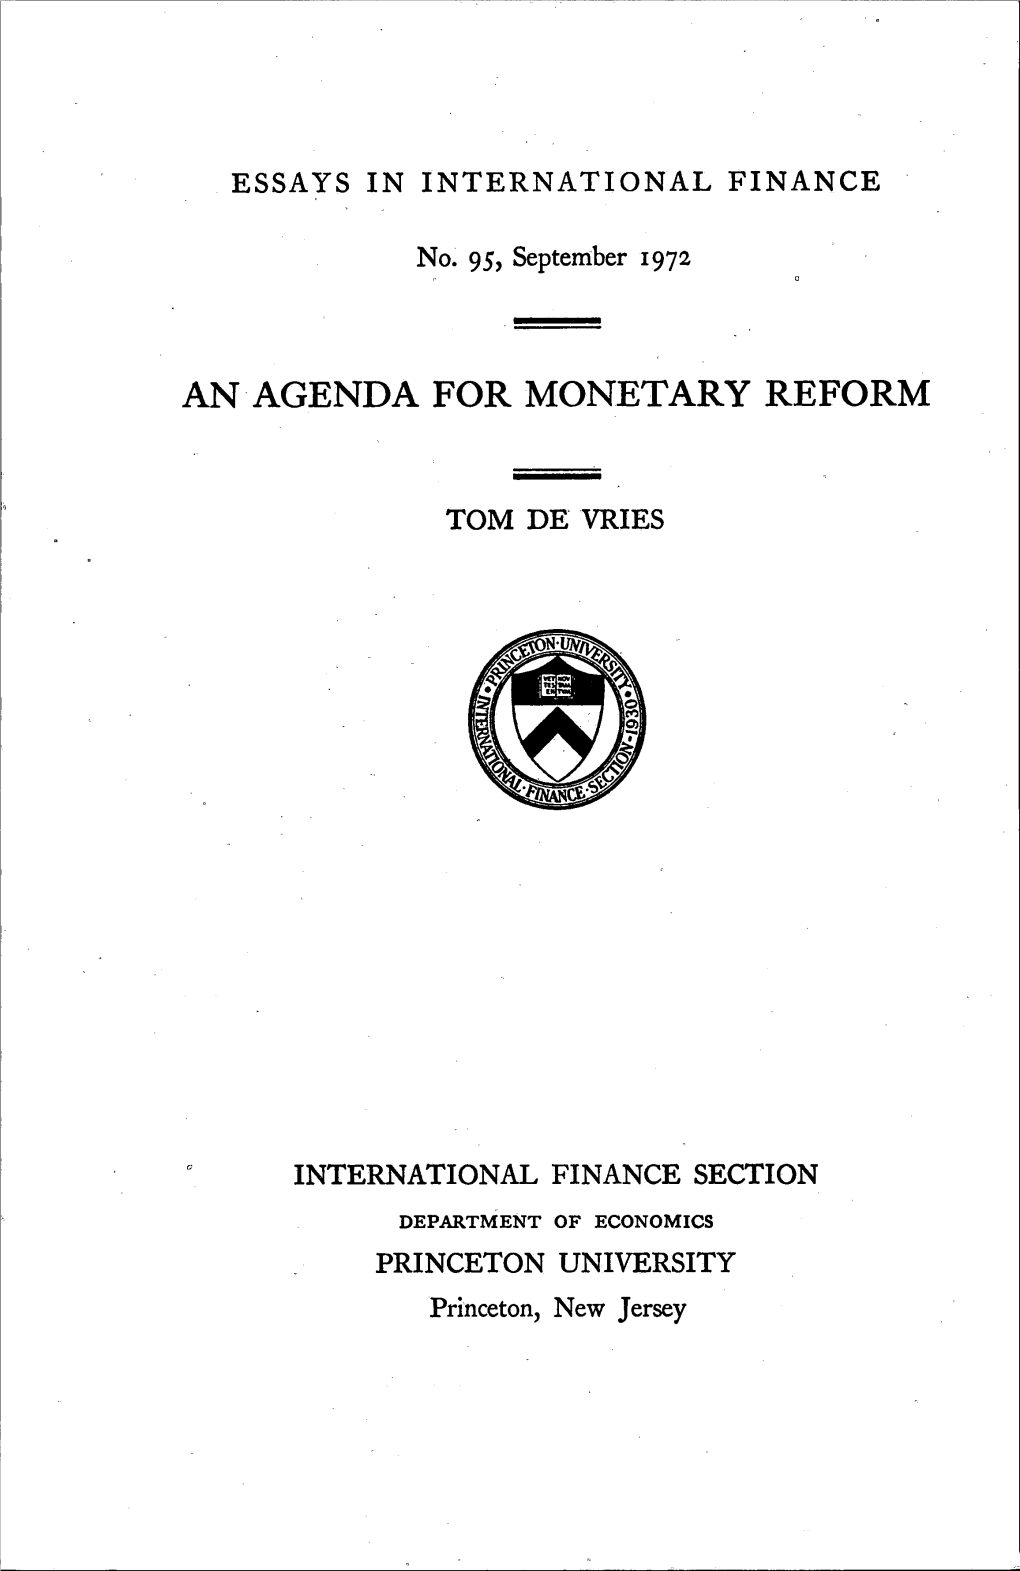 An Agenda for Monetary Reform